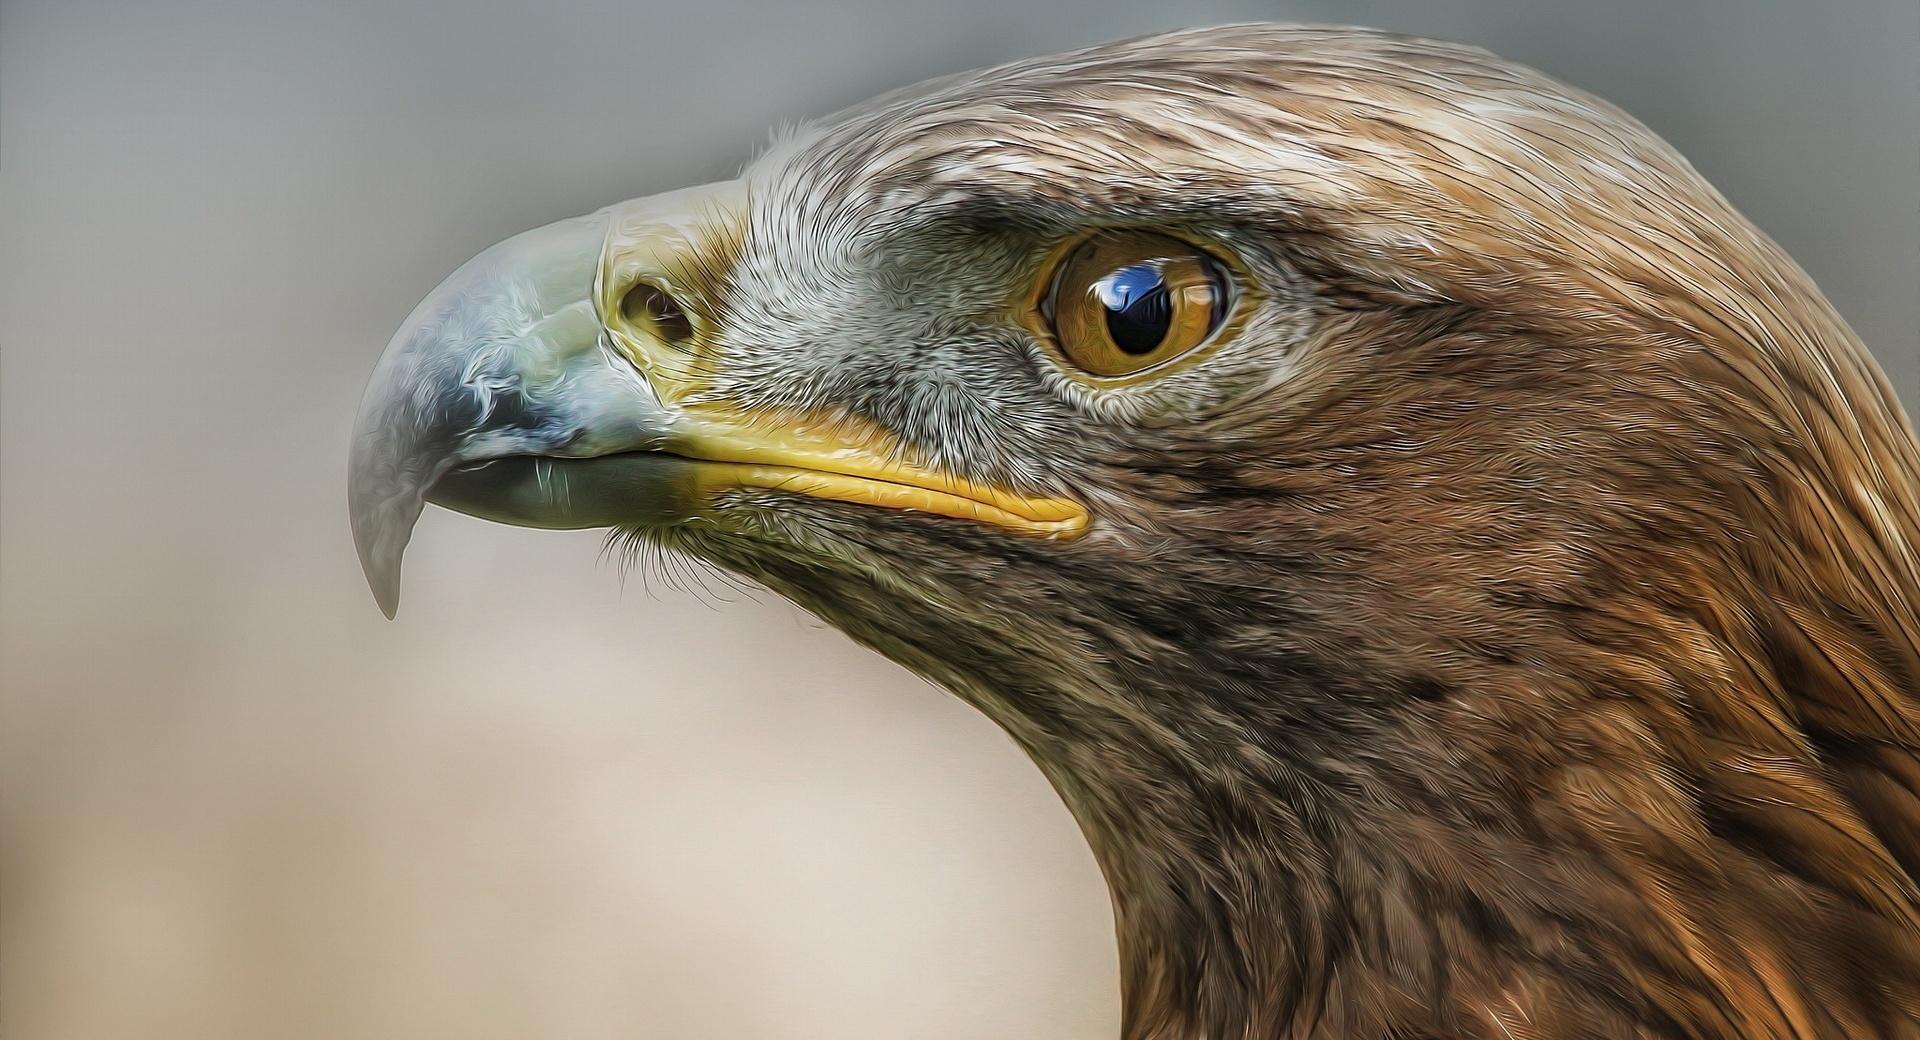 Eagle Macro Predator Bird at 1024 x 768 size wallpapers HD quality